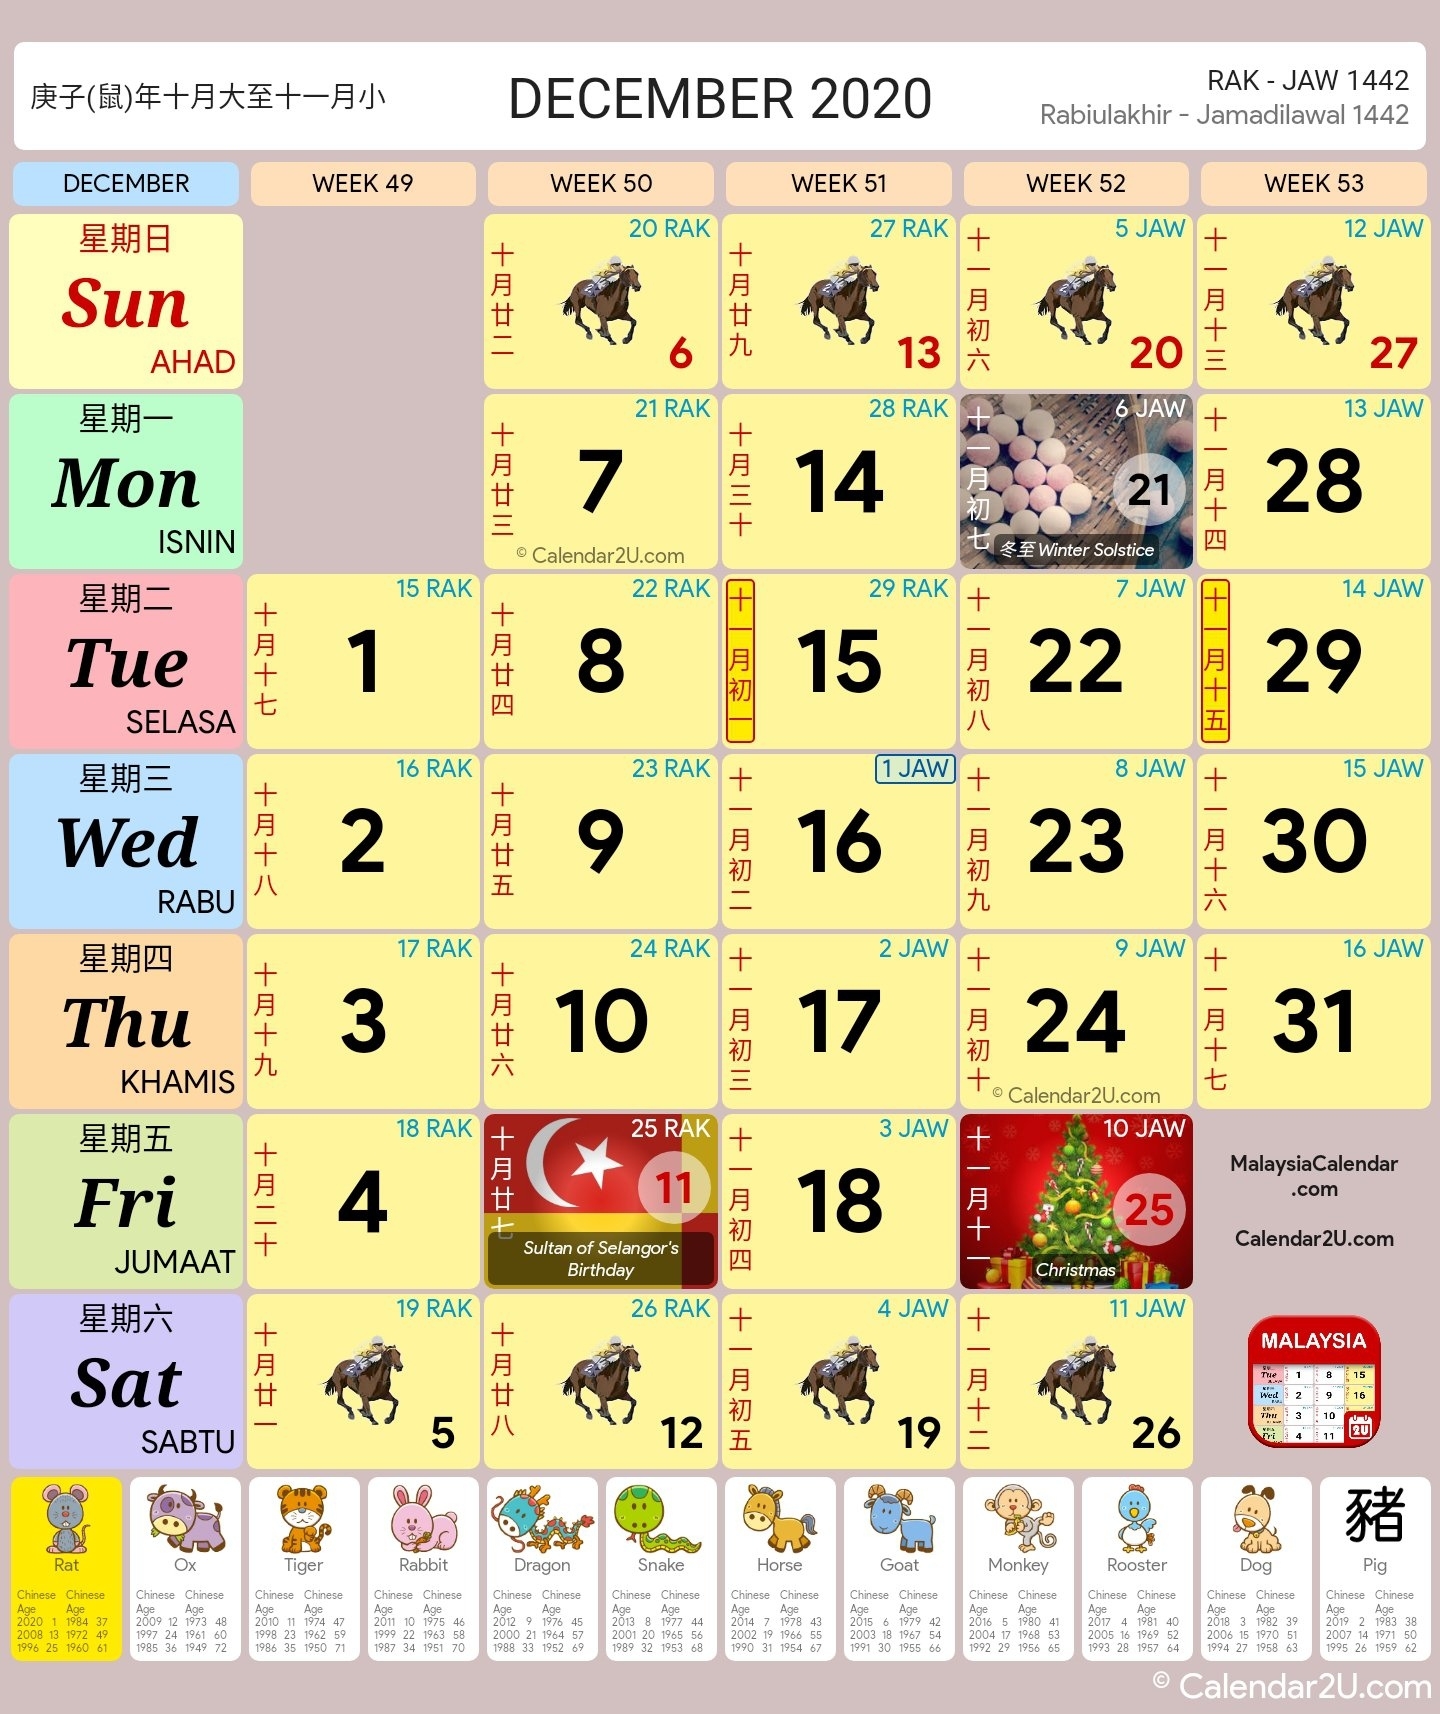 Malaysia Calendar Year 2020 (School Holiday) - Malaysia Calendar School Holiday 2020 Malaysia Calender